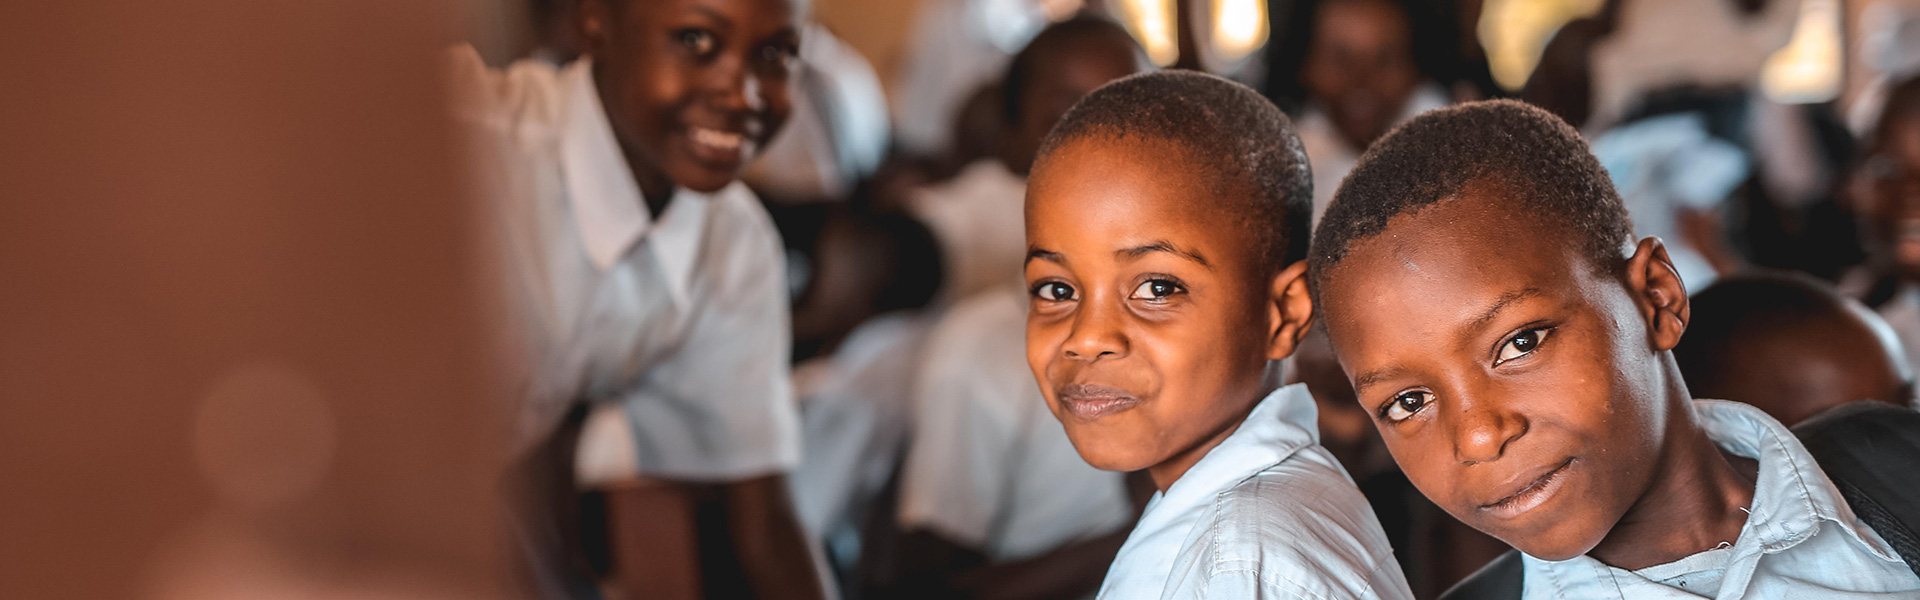 tanzania-school-children-smiling